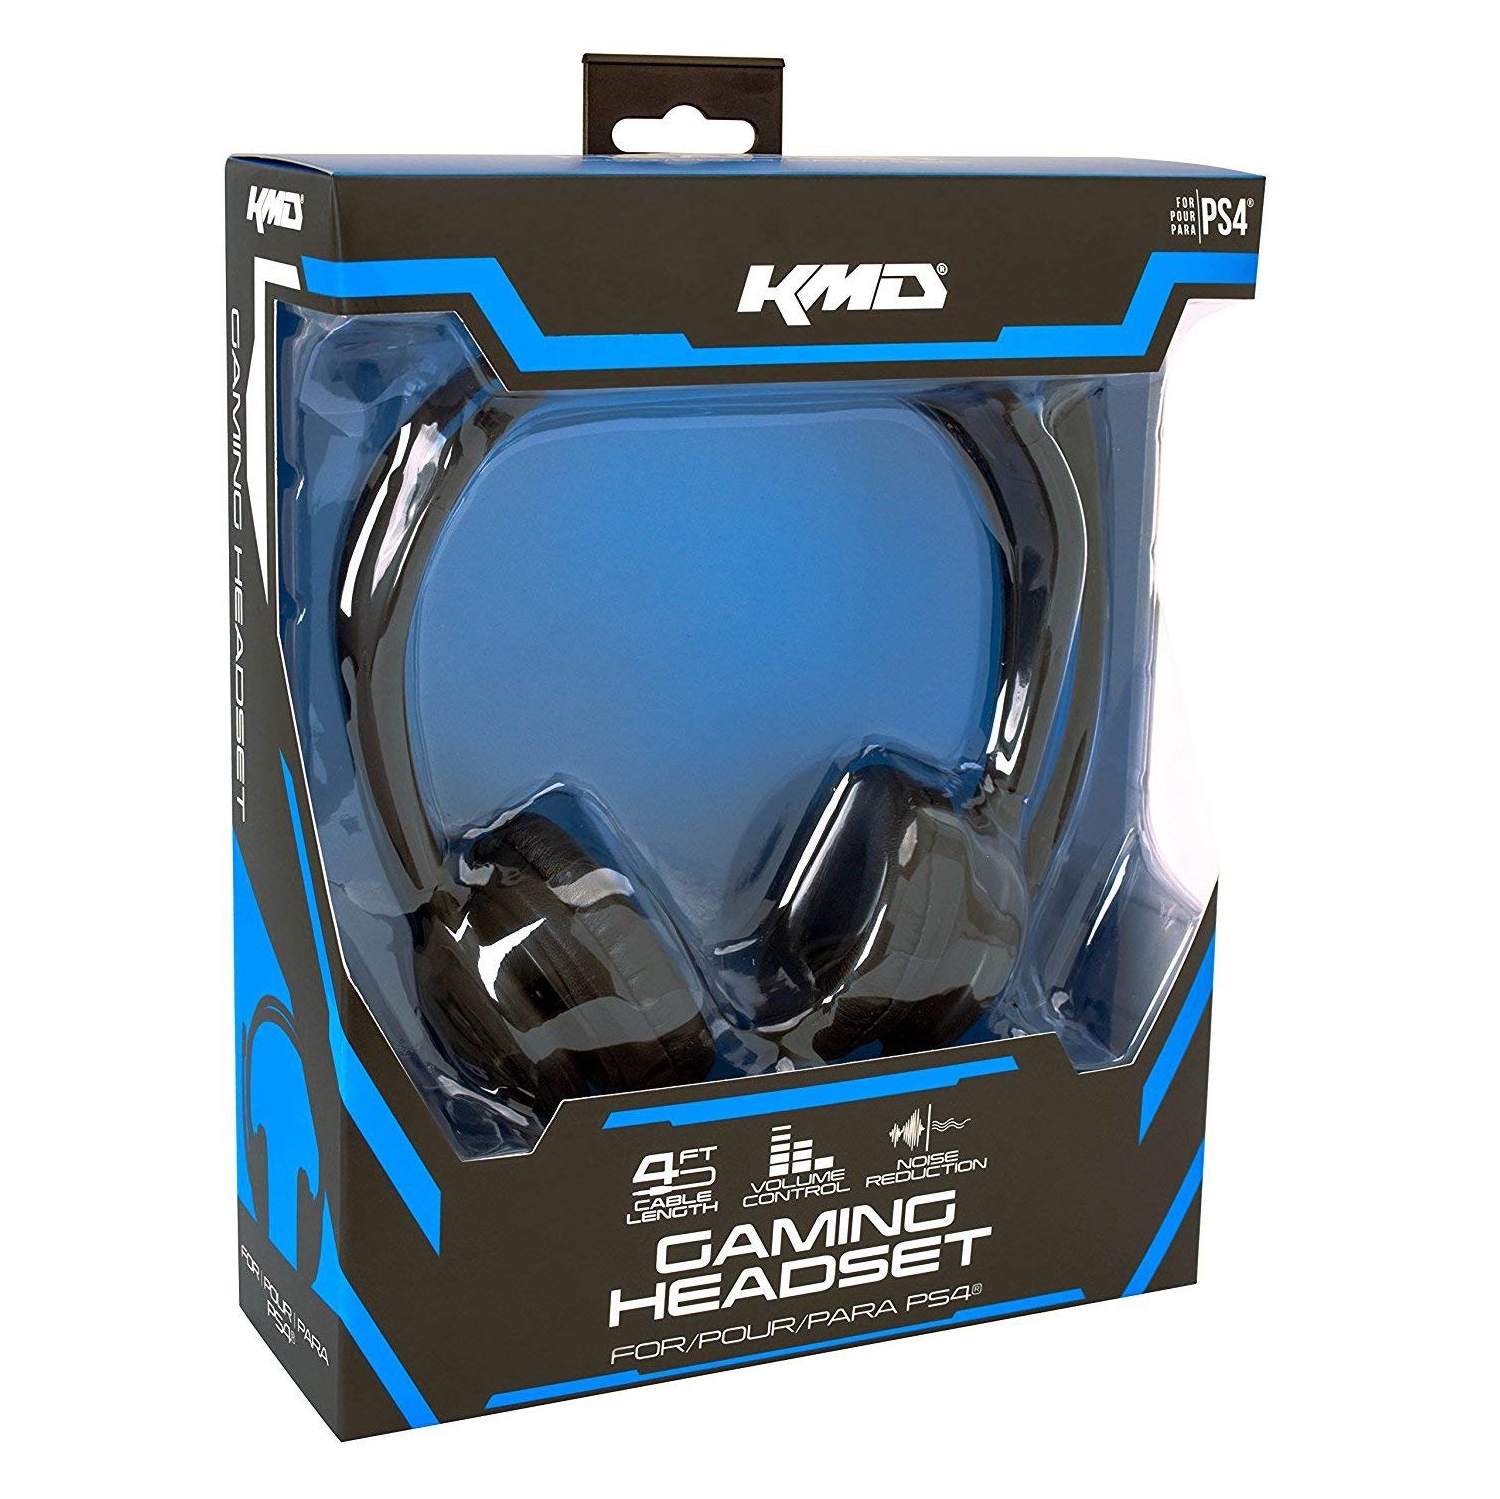 kmd live headset xbox one